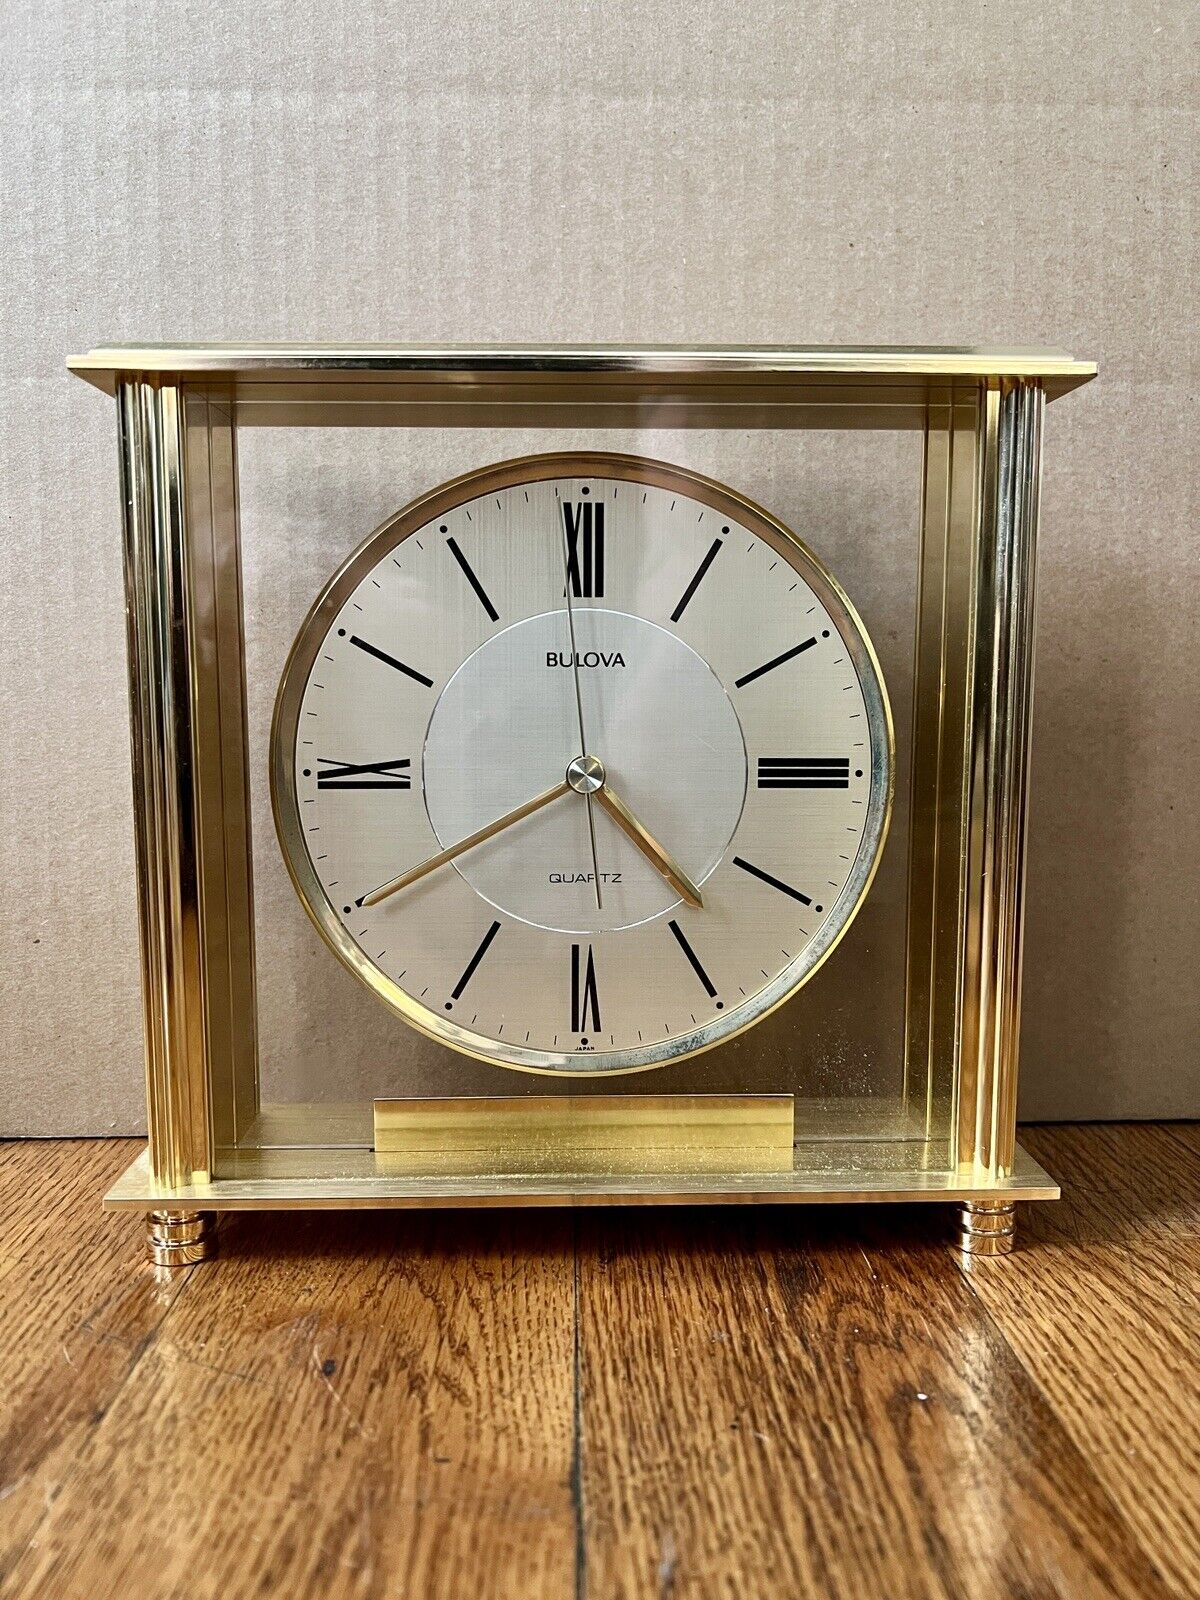 Vintage BULOVA Brass ’Grand Prix’ Quartz Mantle Desk Clock with Engraving Plate